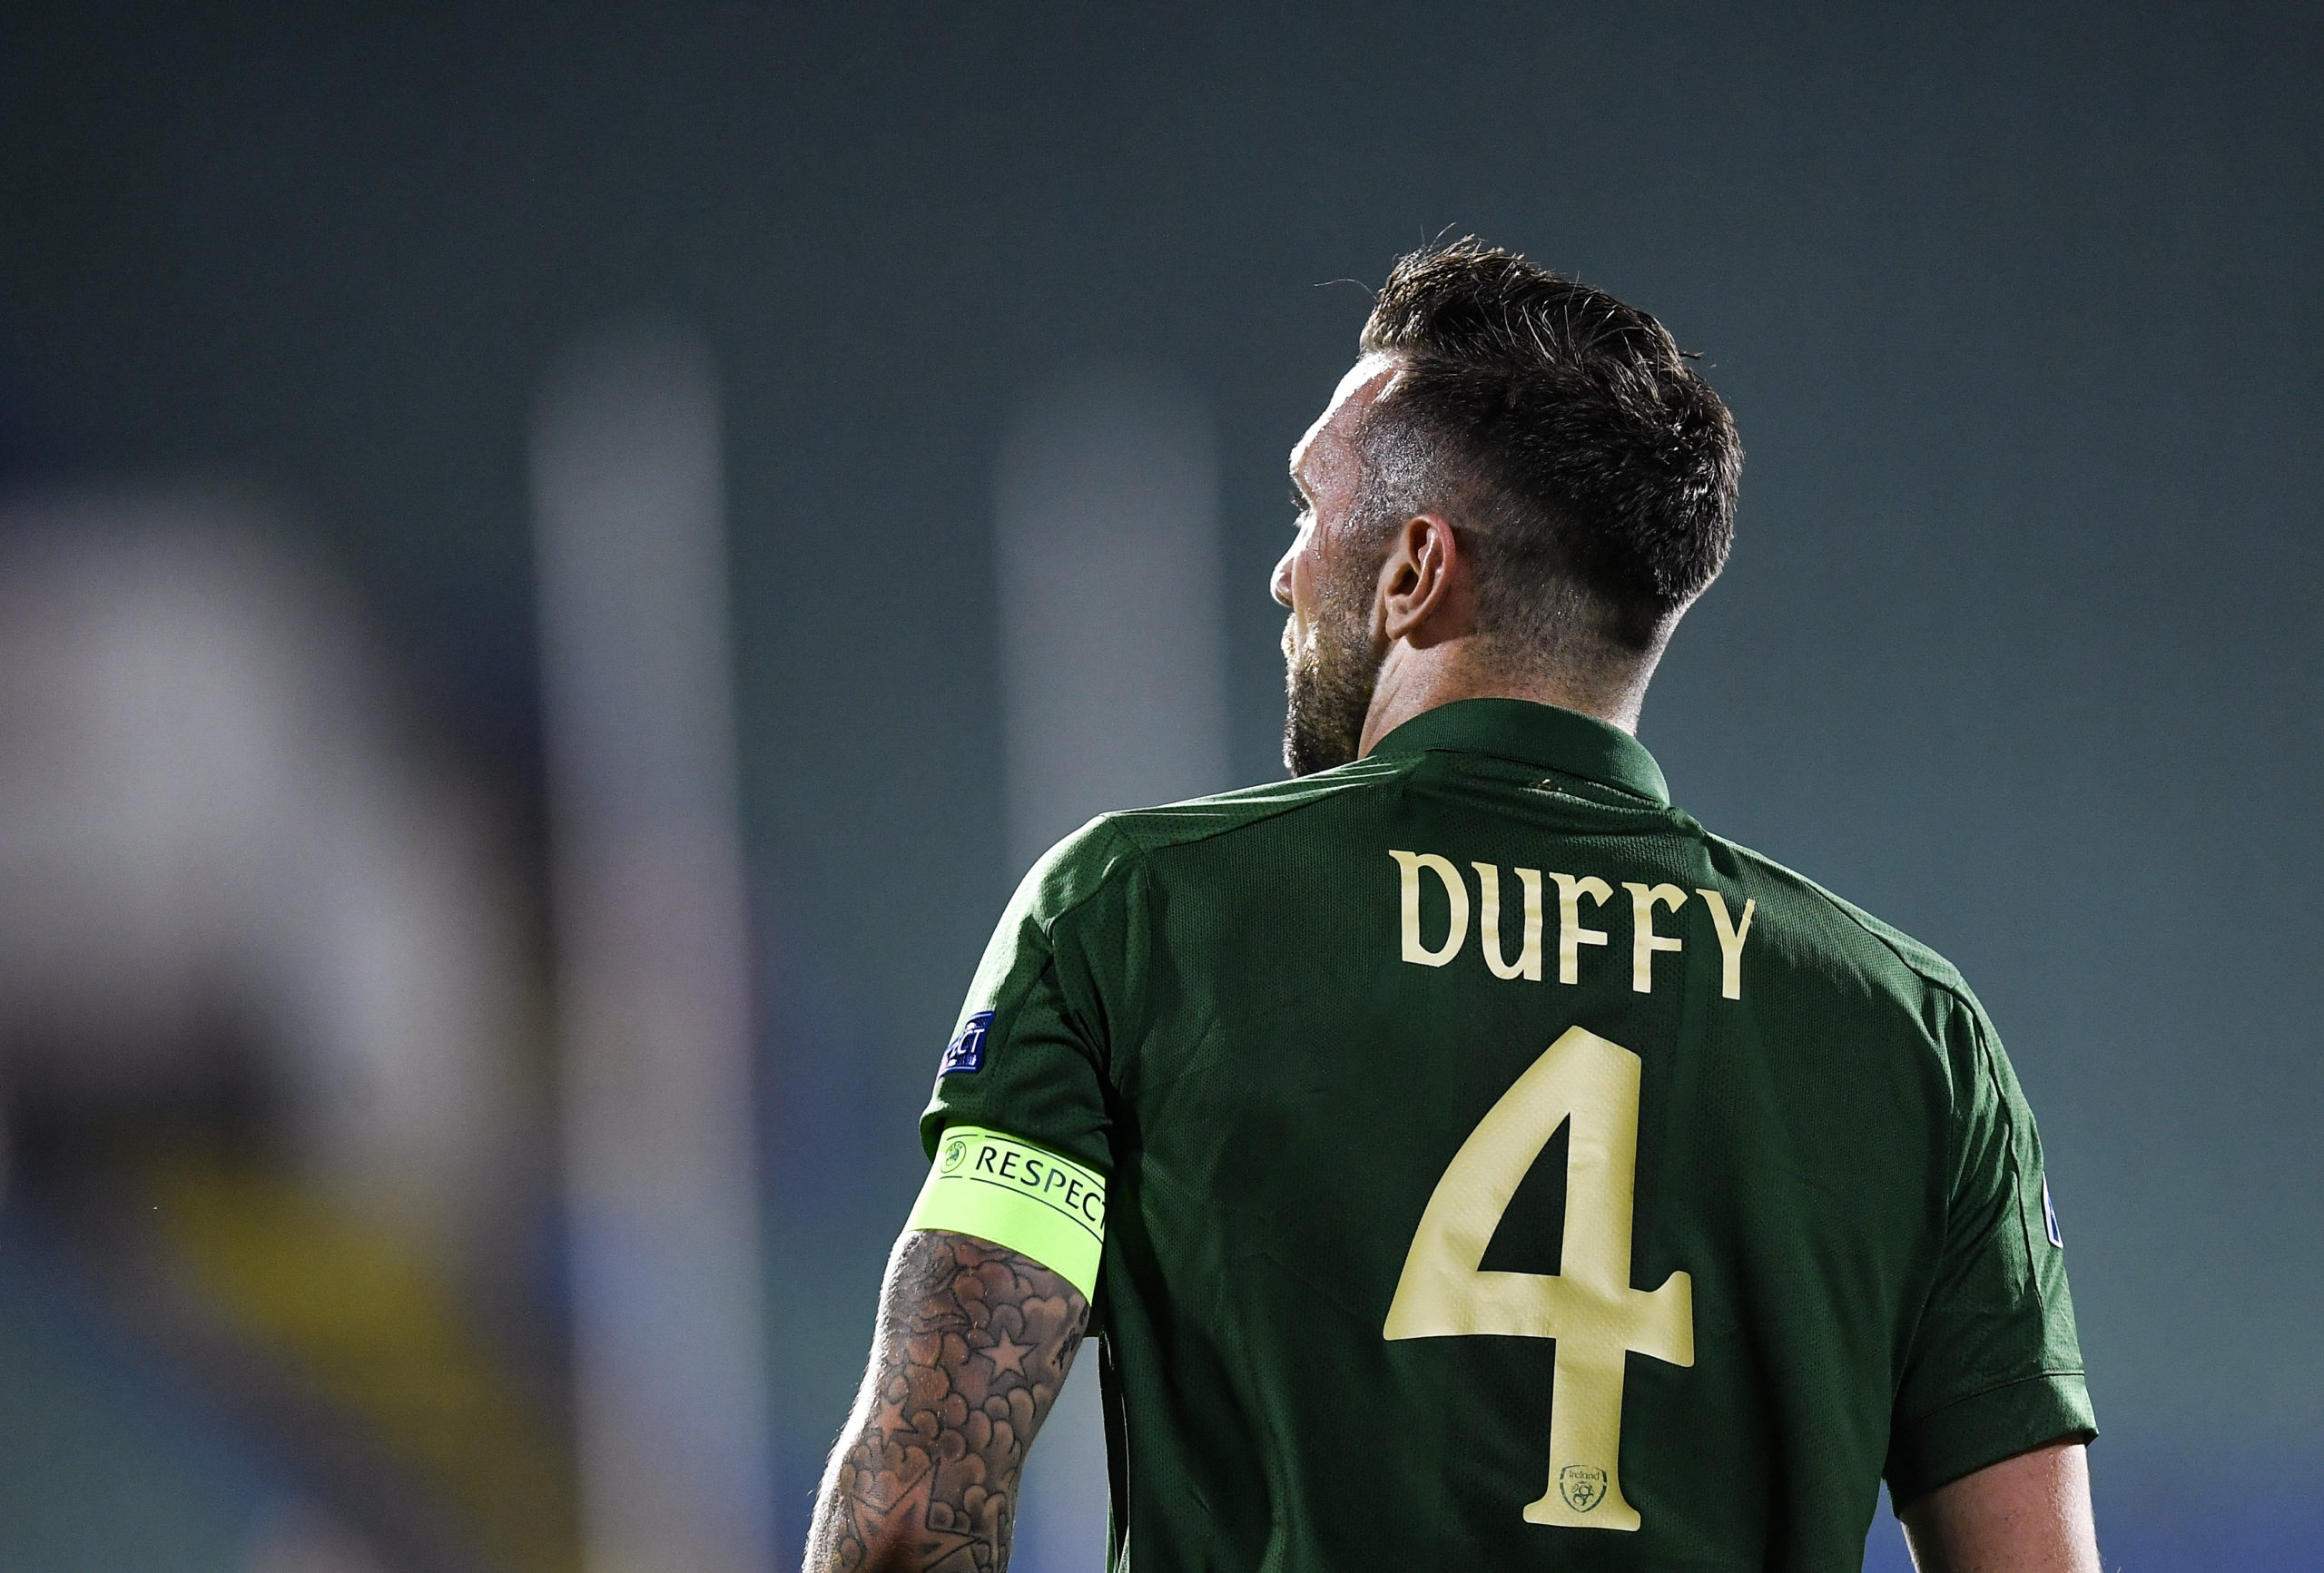 Shane Duffy captained Ireland against Bulgaria